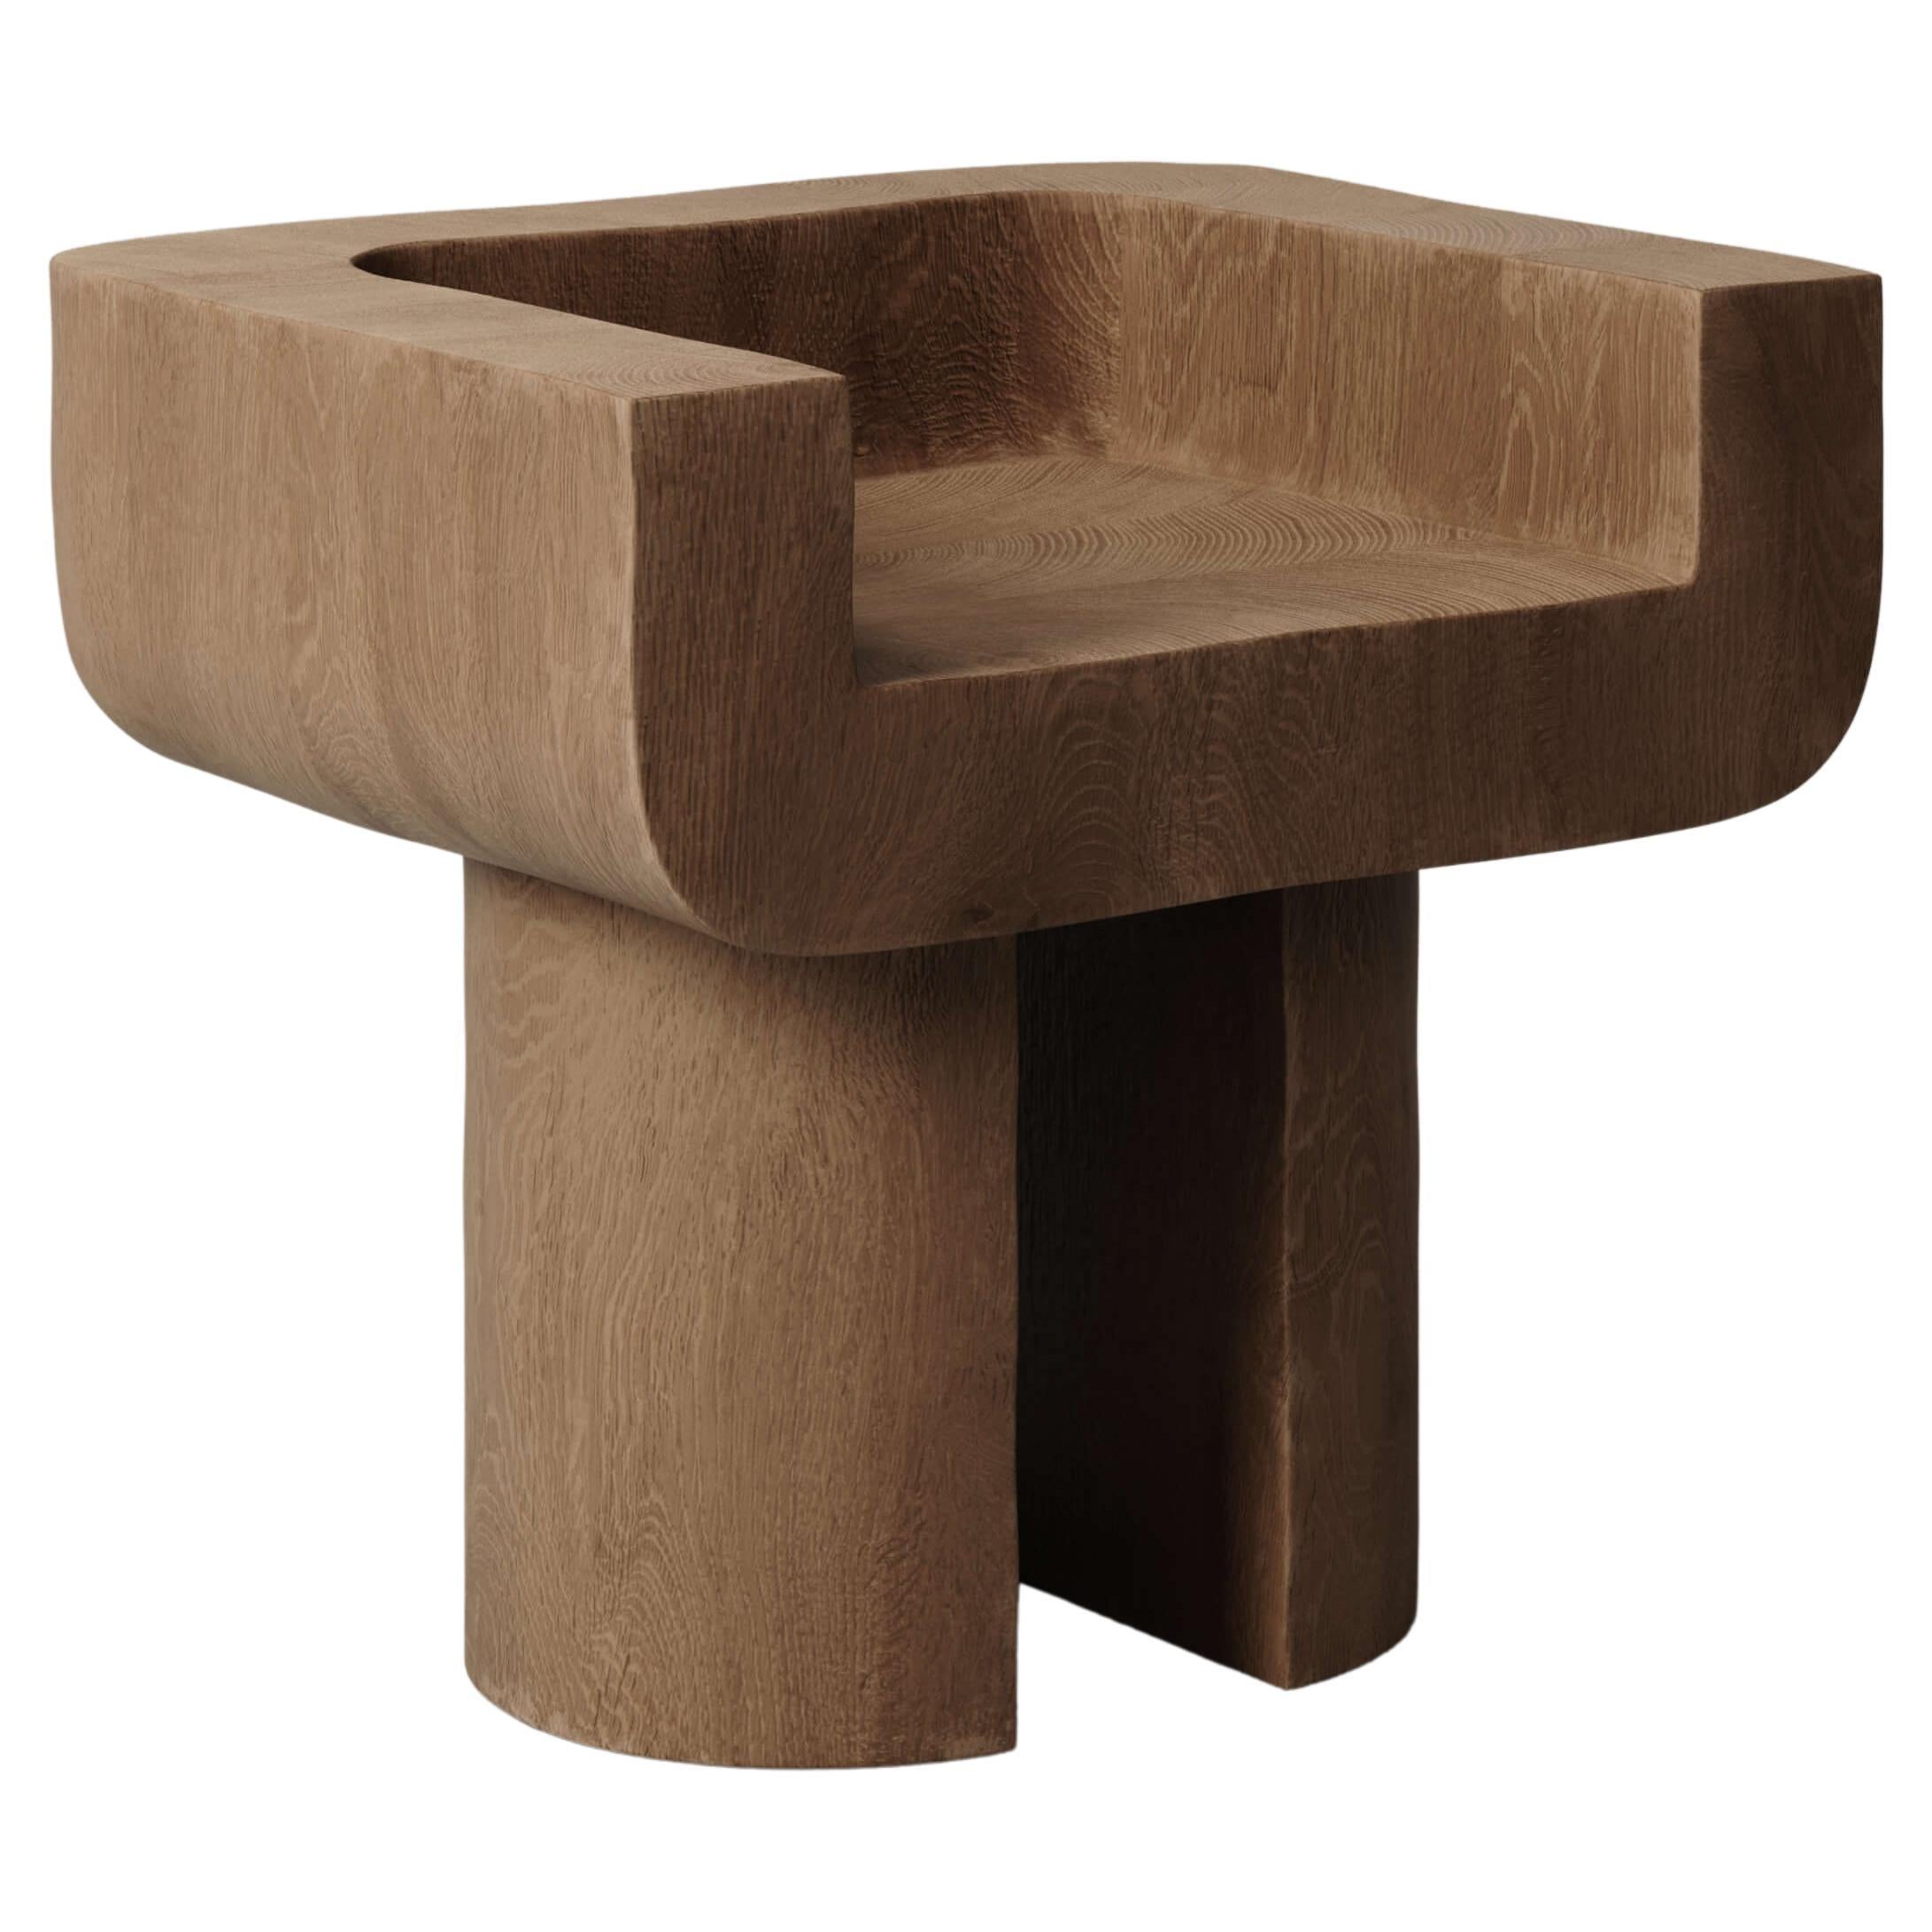 M_001 Chair by Monolith Studio, Oak For Sale